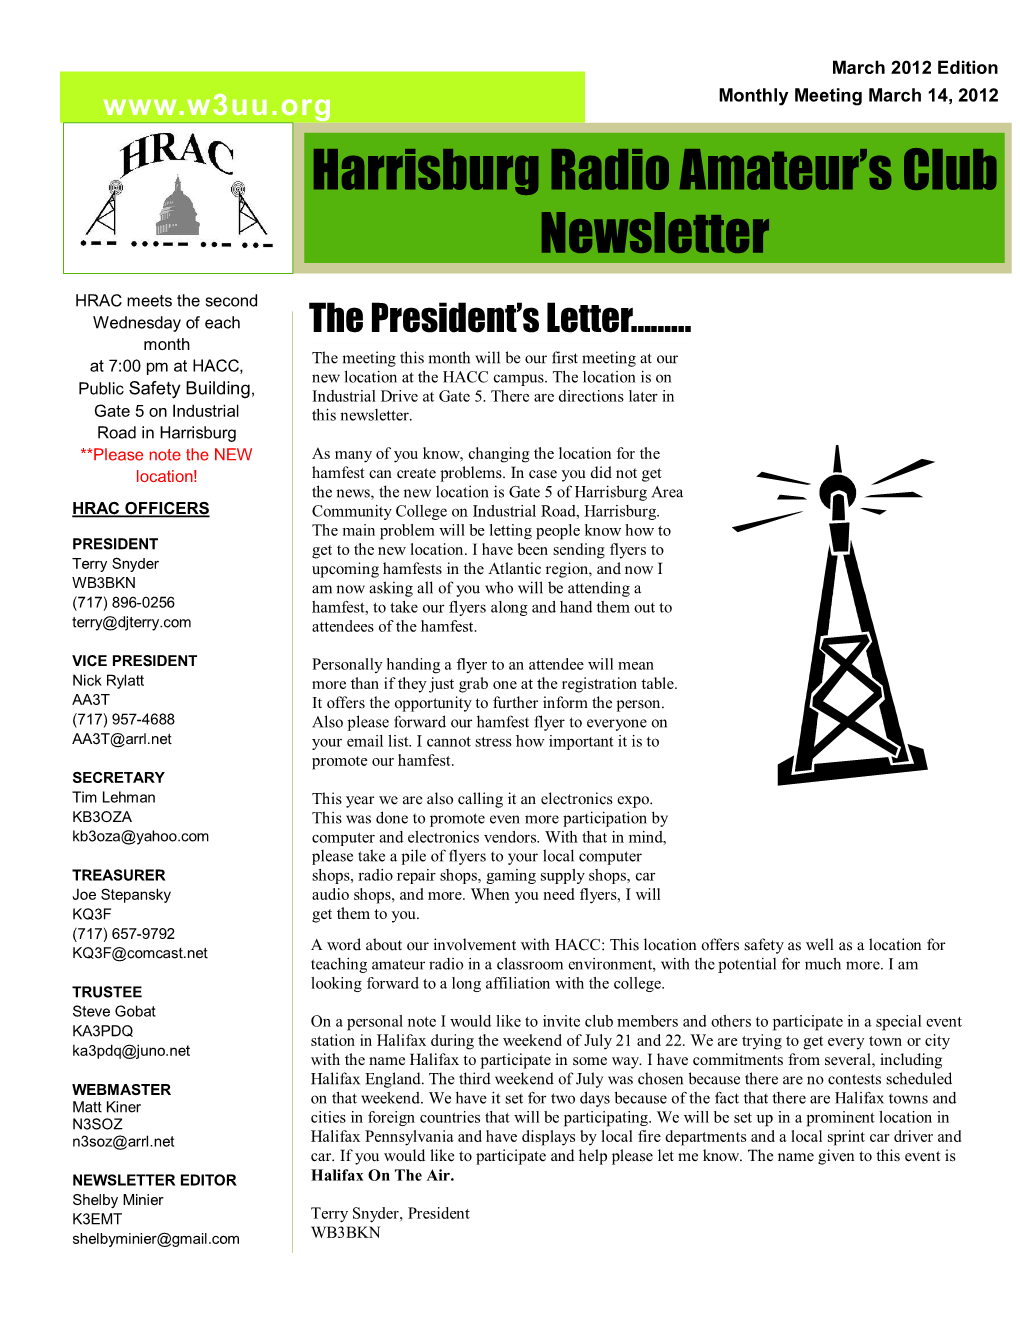 Harrisburg Radio Amateur's Club Newsletter